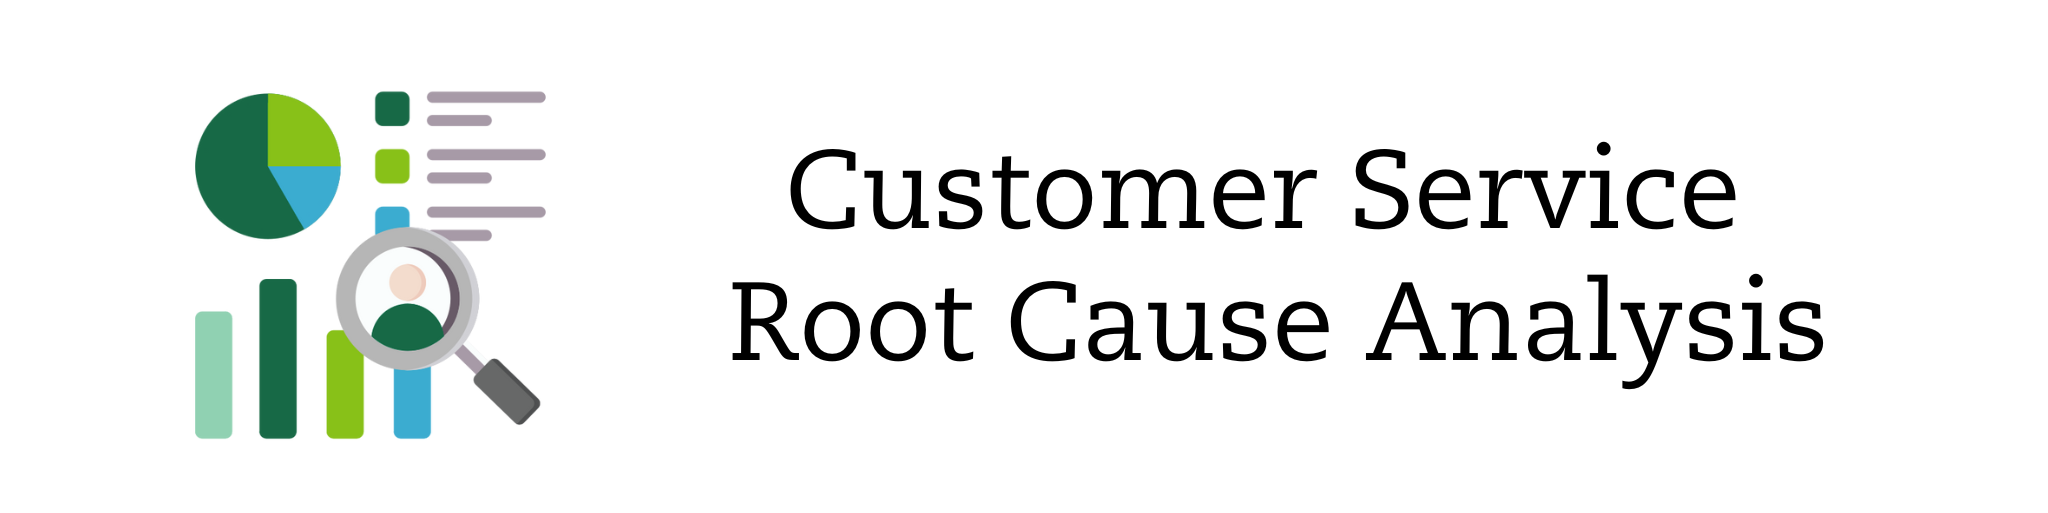 Customer Service Root Cause Analysis Website Banner